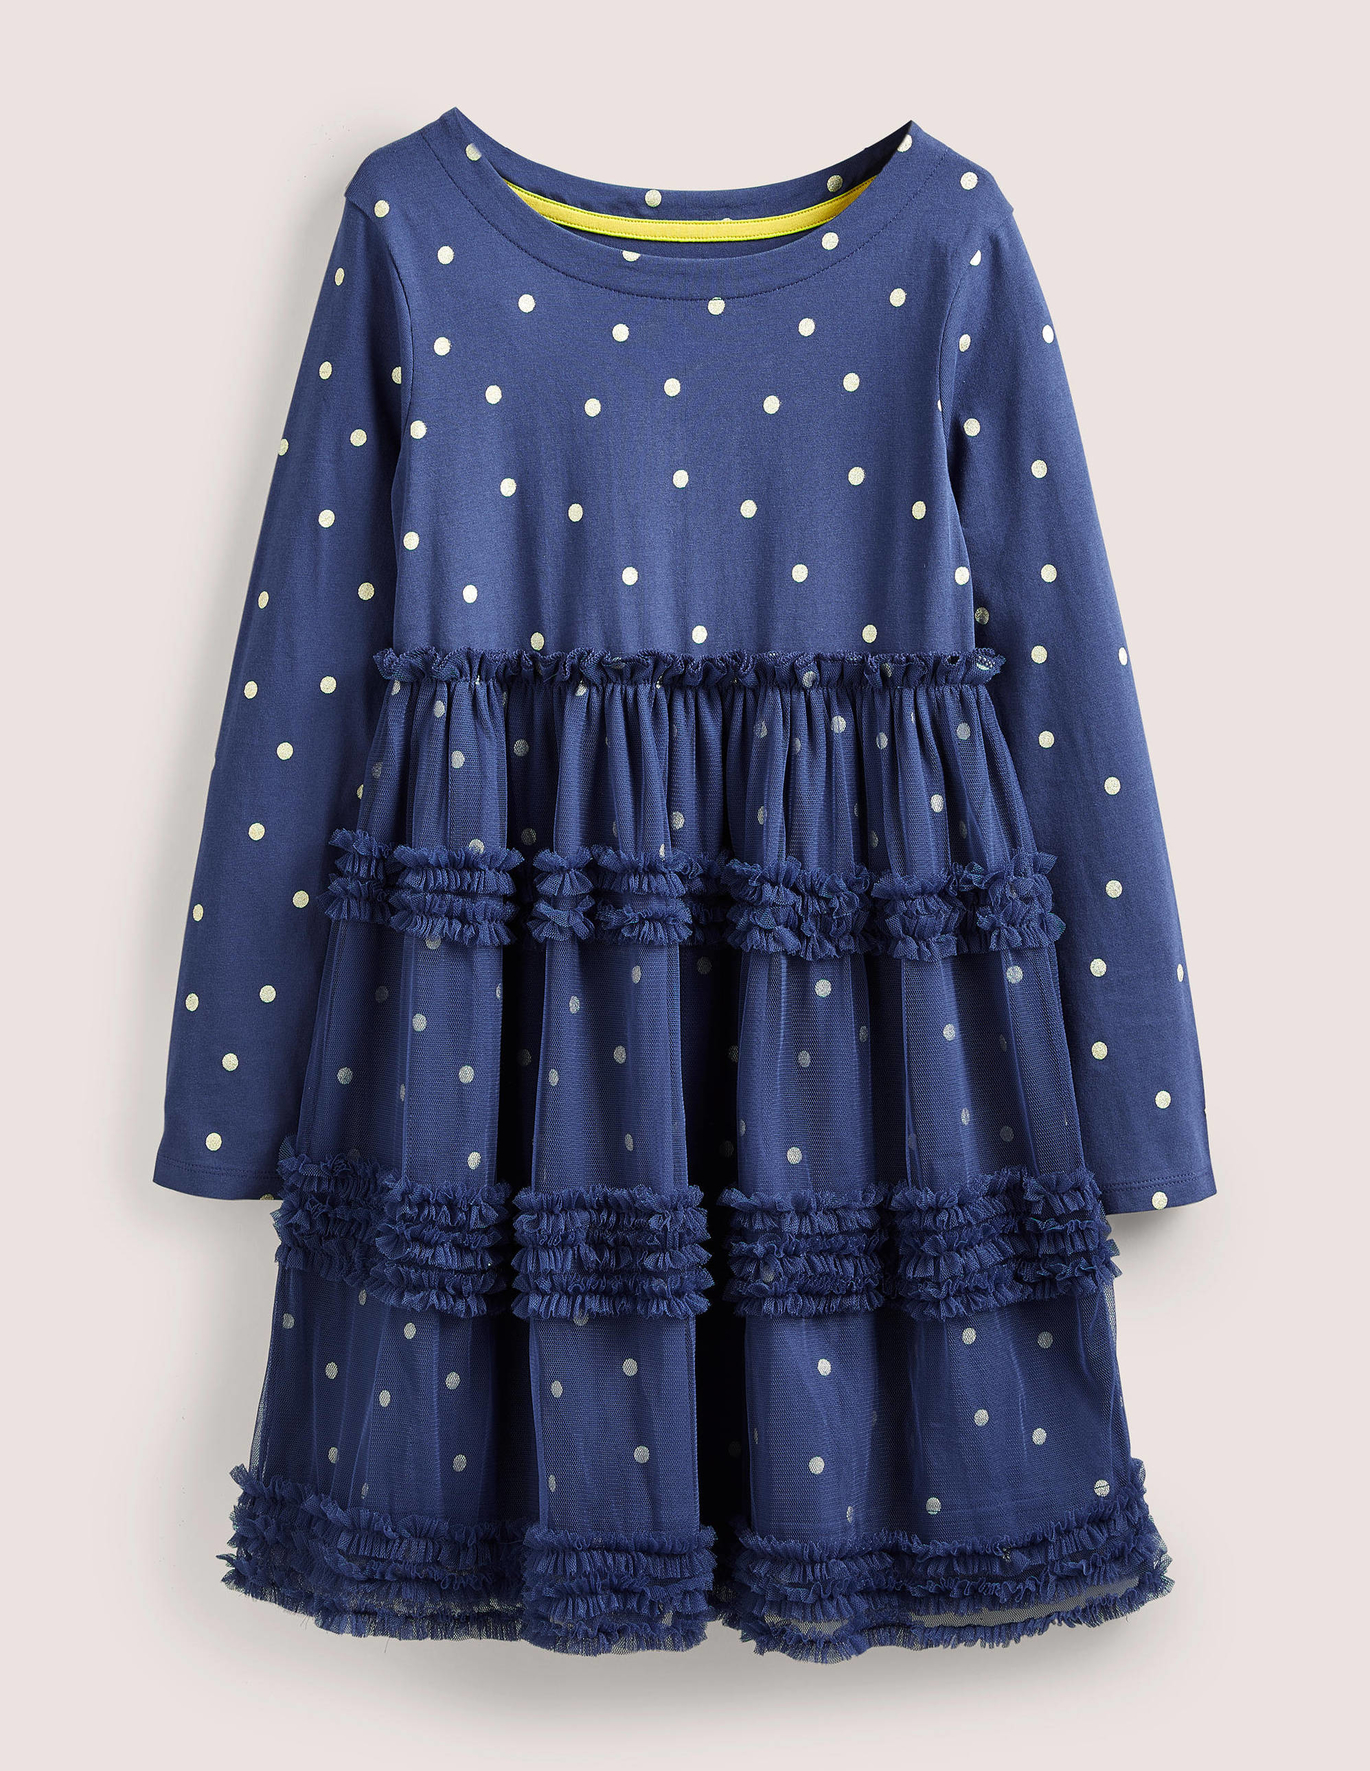 Boden Long Sleeve Jersey Tulle Dress - Starboard Blue/Gold Spot